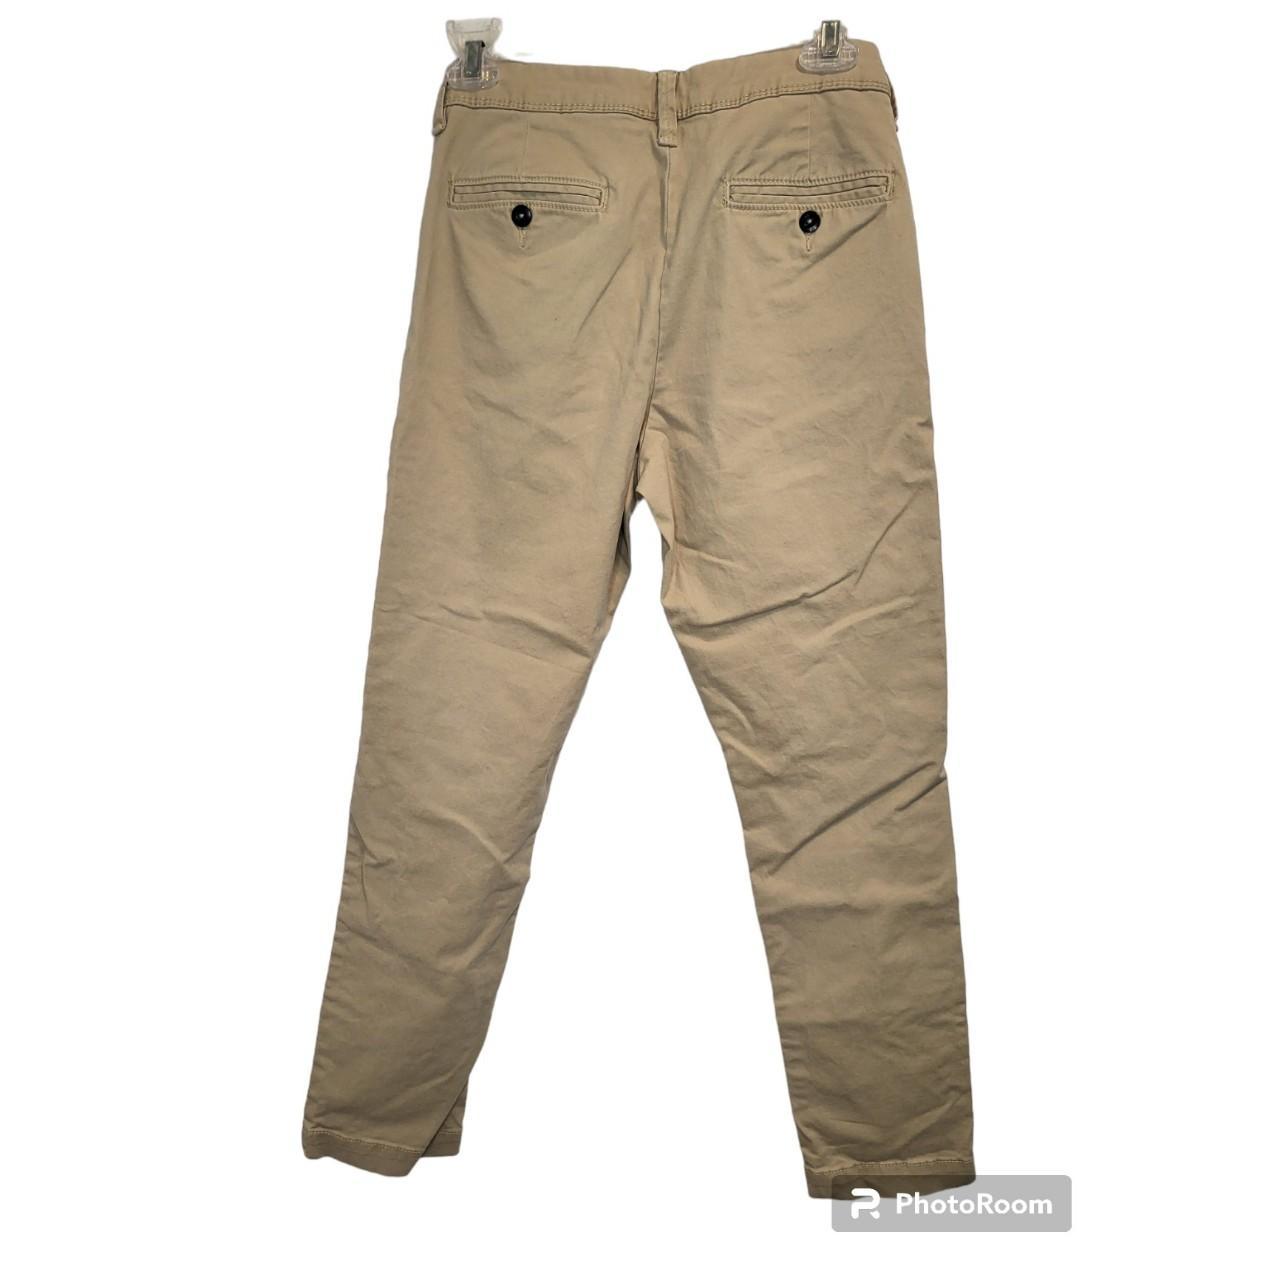 Boys Aero Khaki Uniform Skinny Pants is a stylish - Depop